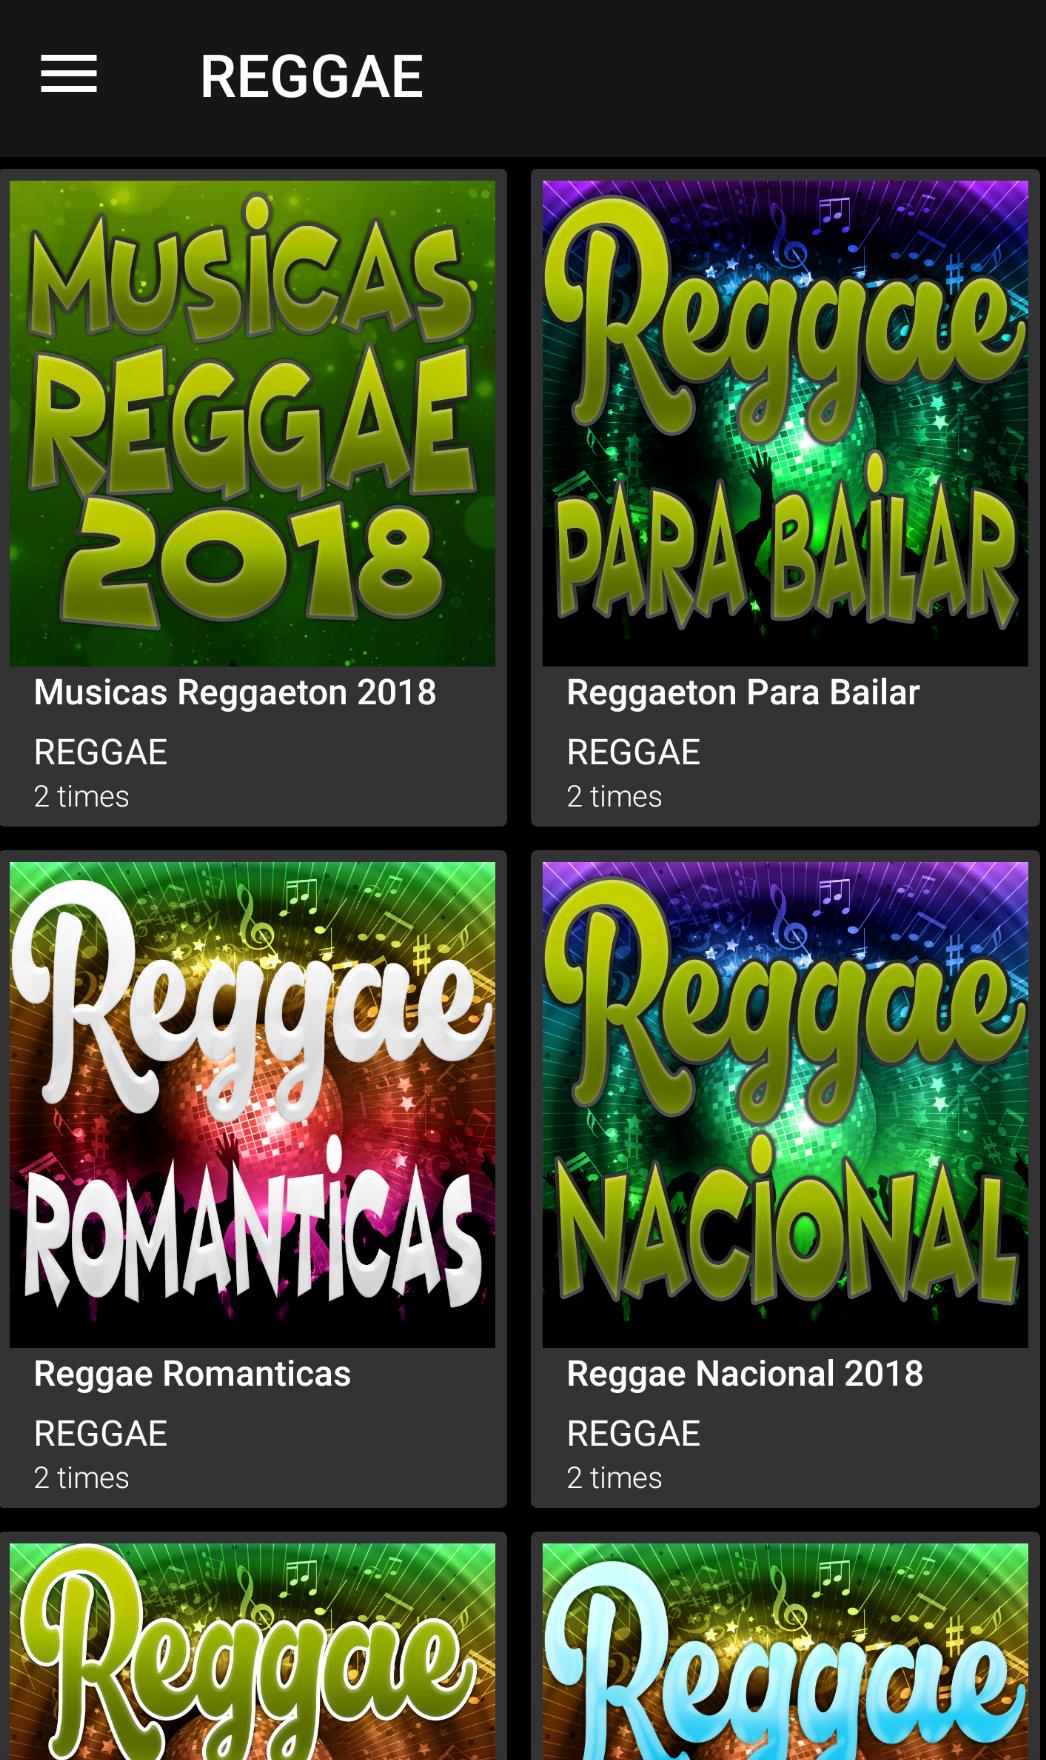 Reggaeton Para bailar for Android - APK Download